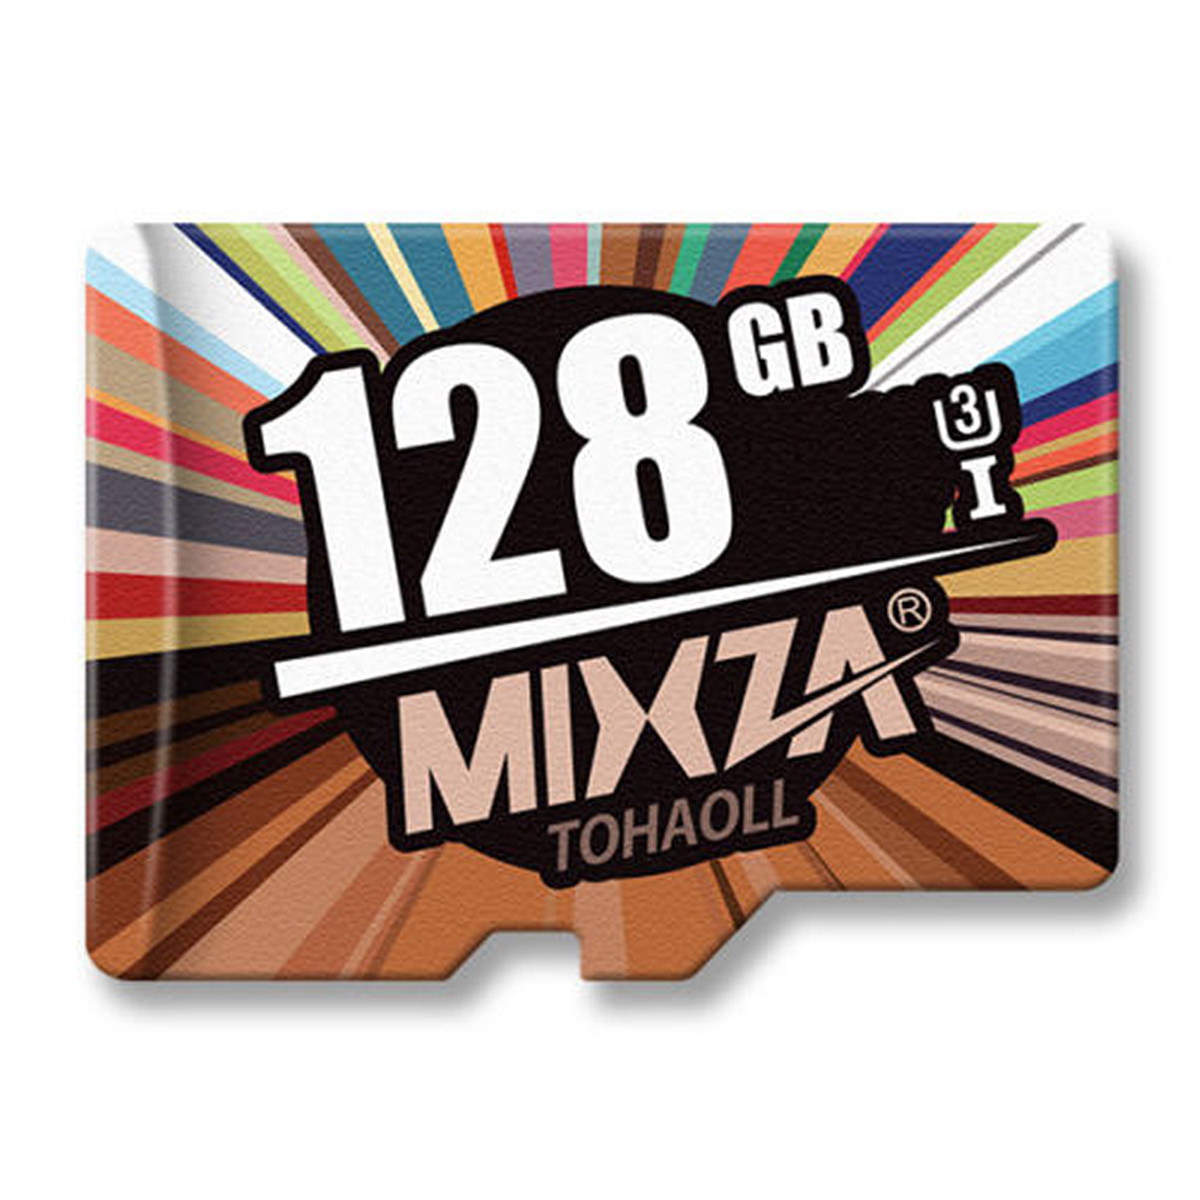 

MIXZA Fashion Edition U3 Class 10 128GB TF Micro Memory Card for DSLR Digital Camera MP3 HIFI Player TV Box Smartphone